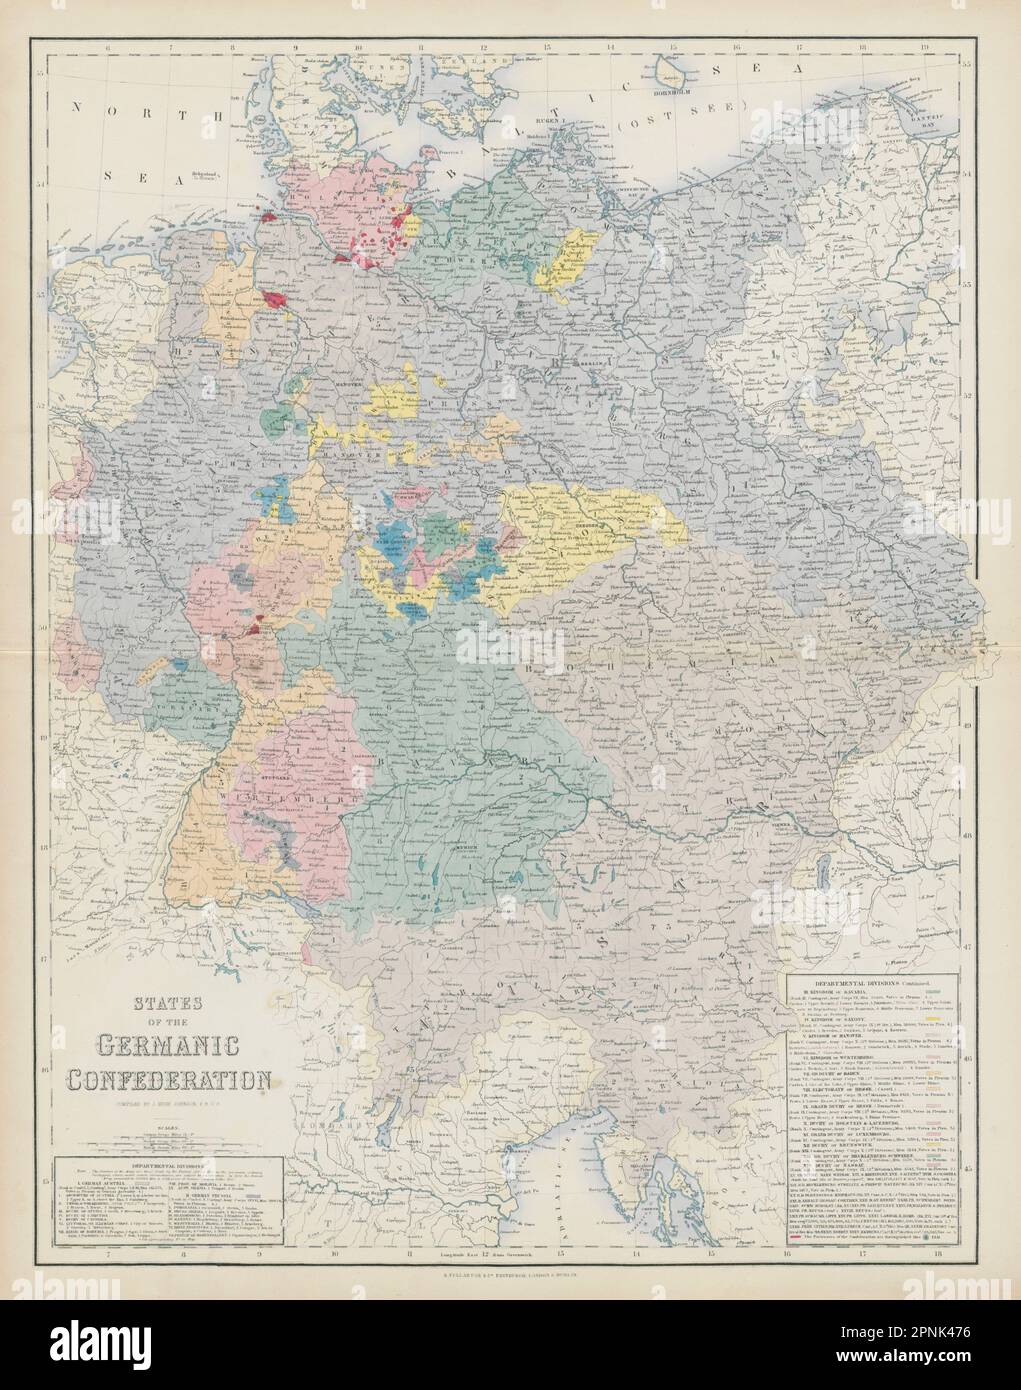 States of the Germanic Confederation. Germany Austria Czechia. SWANSTON 1860 map Stock Photo